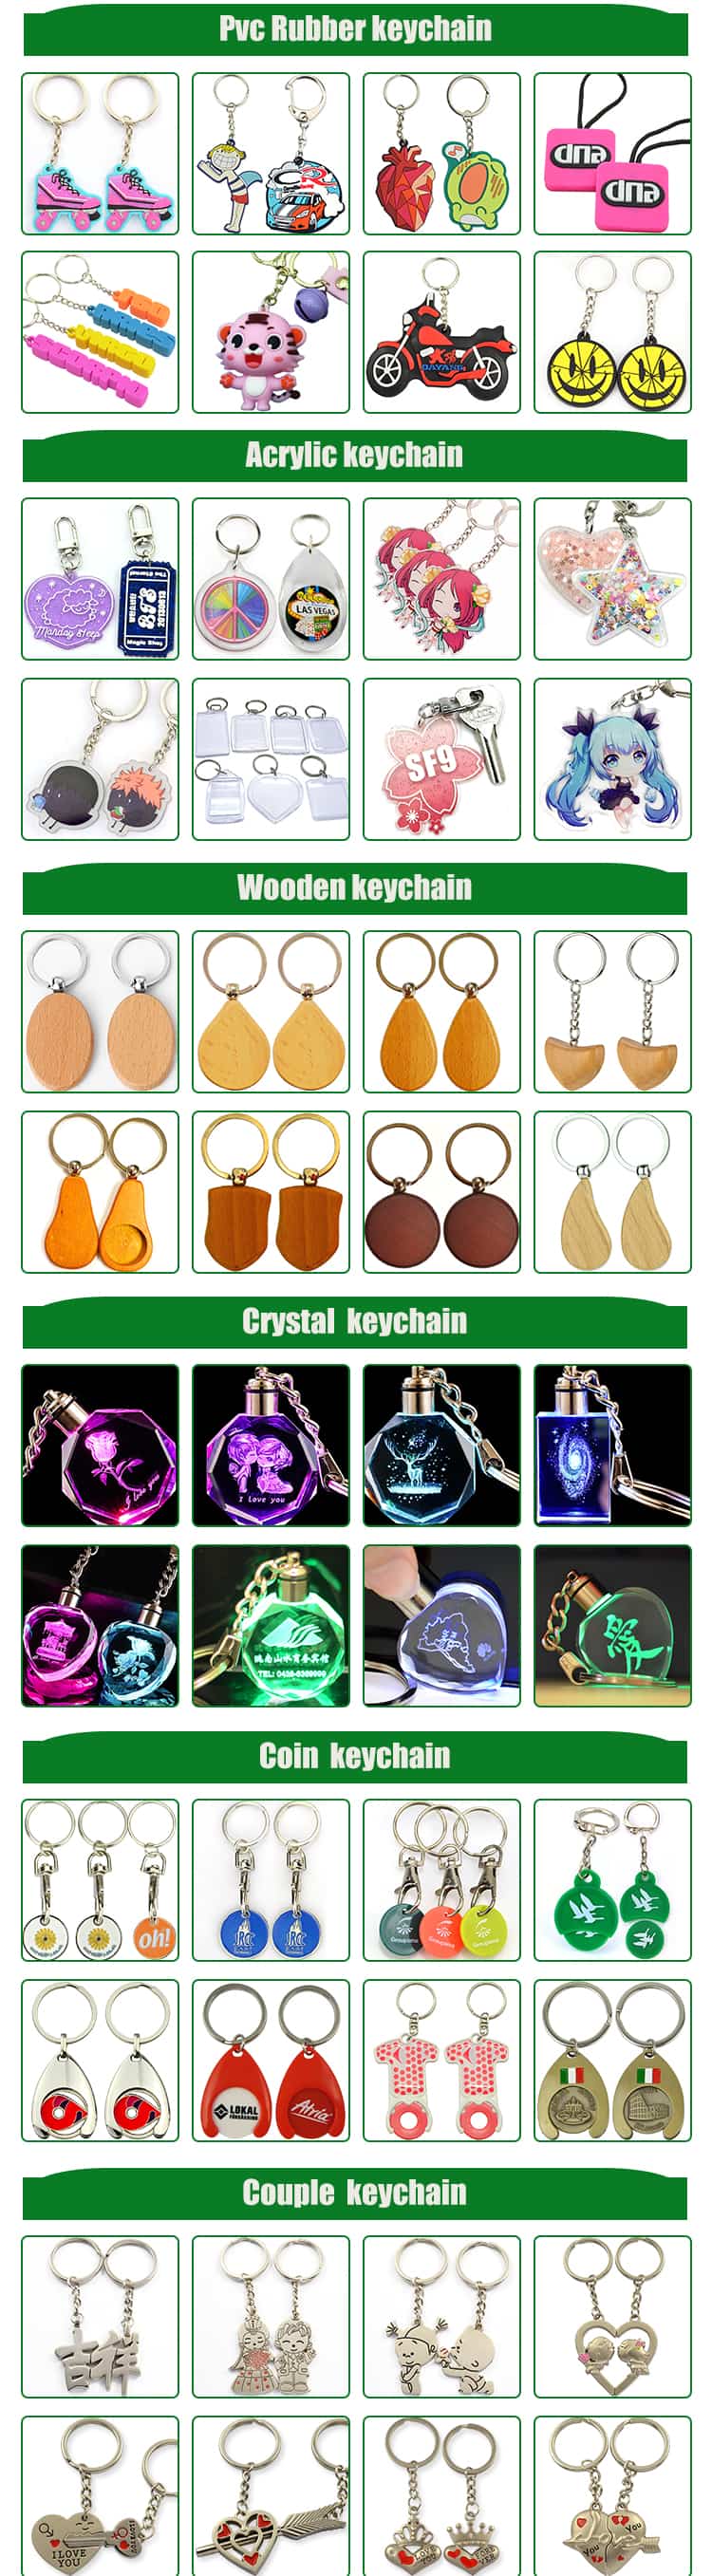 keychain metal-1